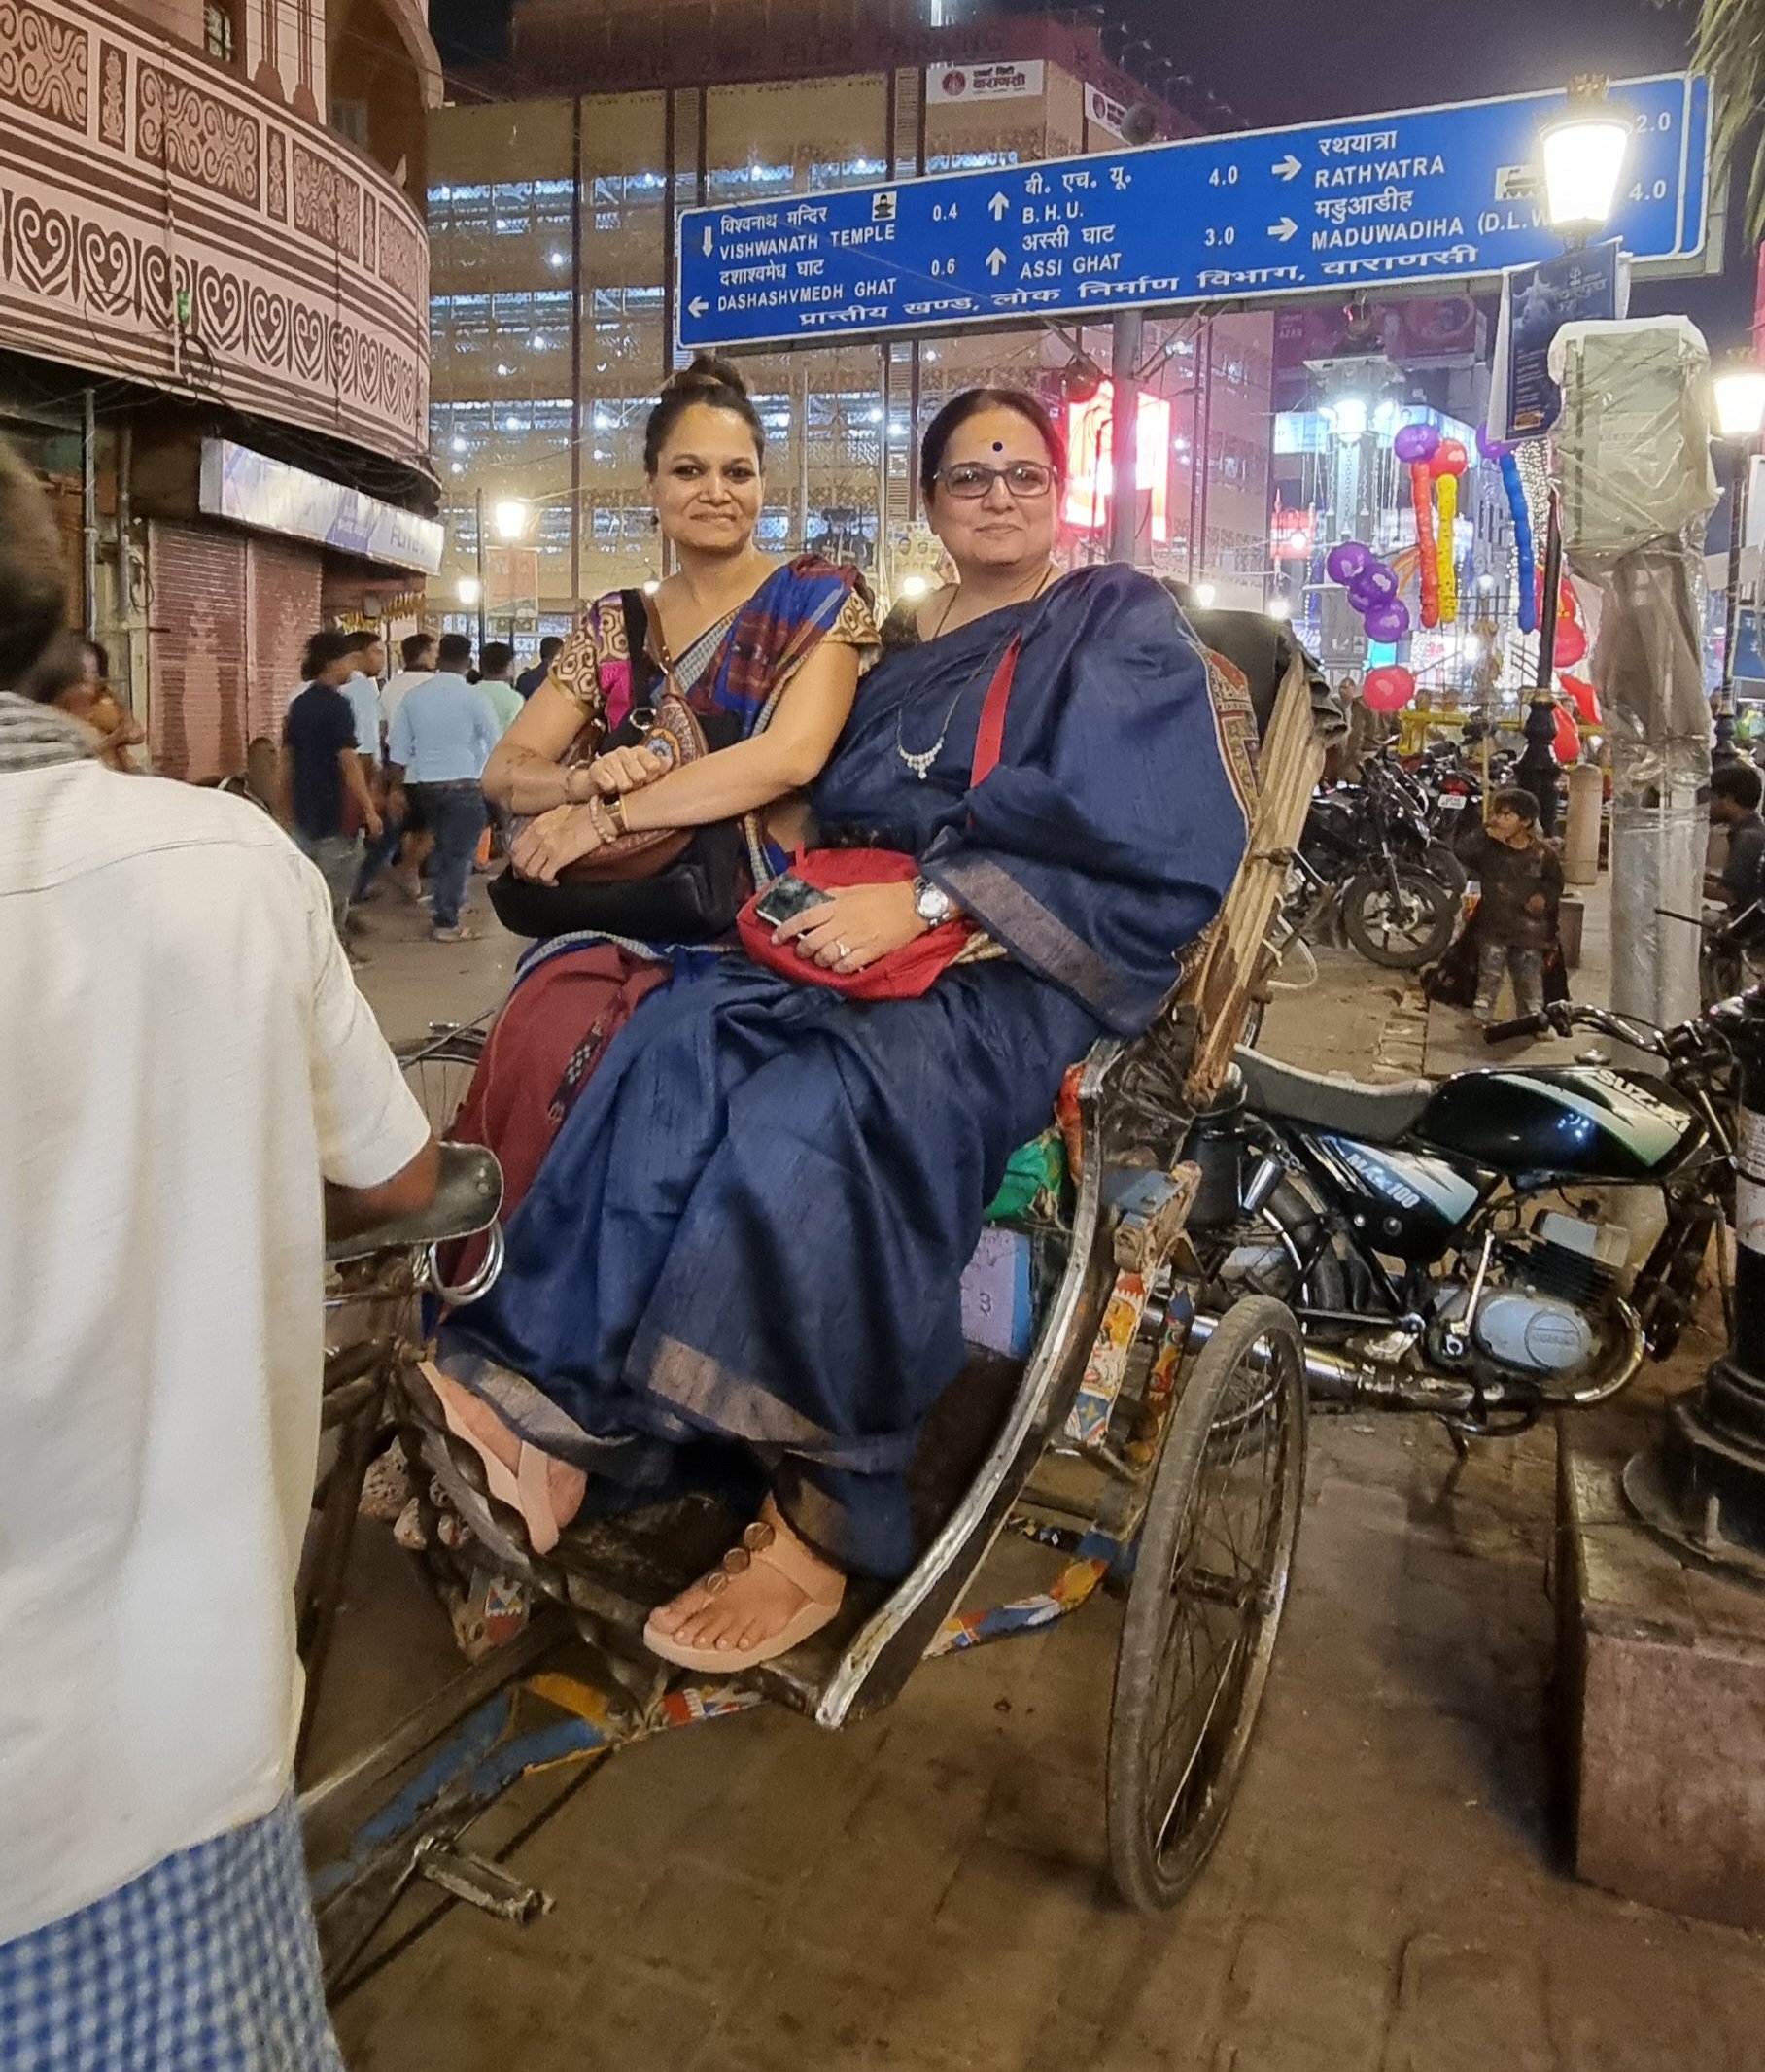 Rickshaw ride near the ghats.